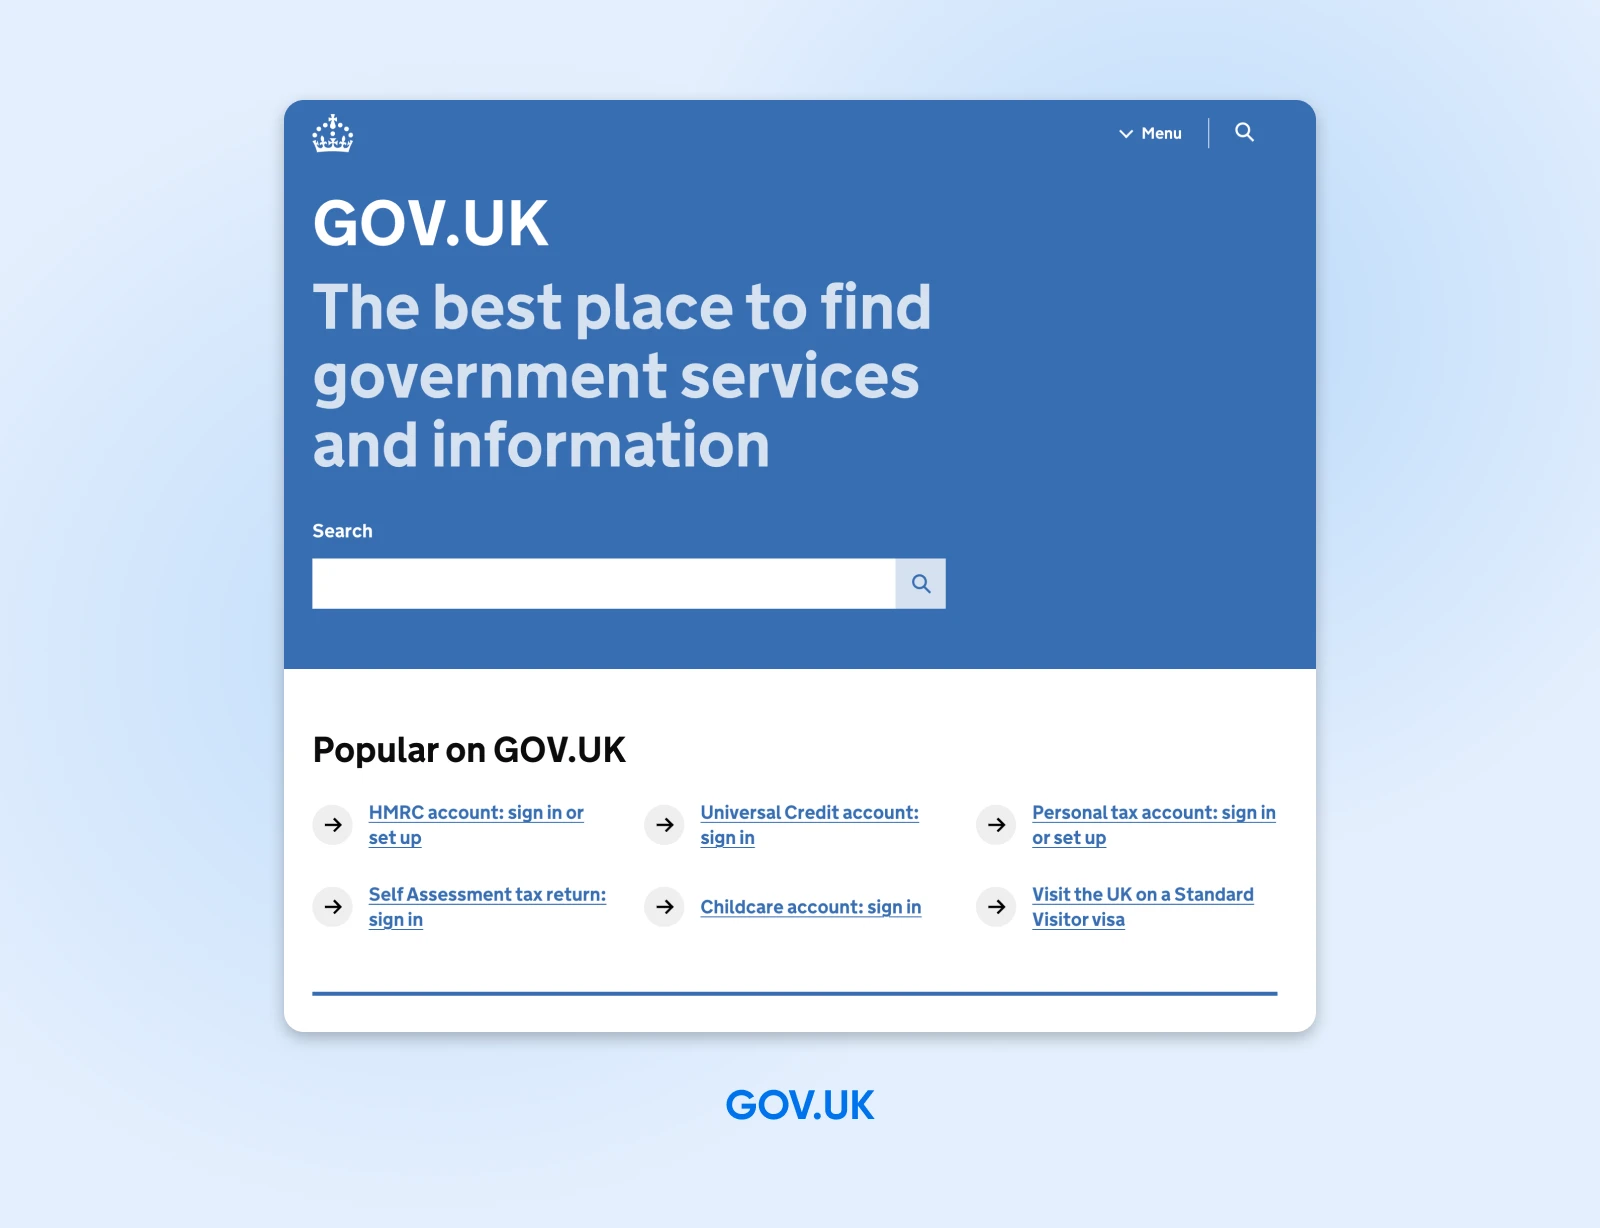 GOV.UK website in a blue-white color scheme with a search bar, and links below "Popular on GOV.UK" for better navigation.